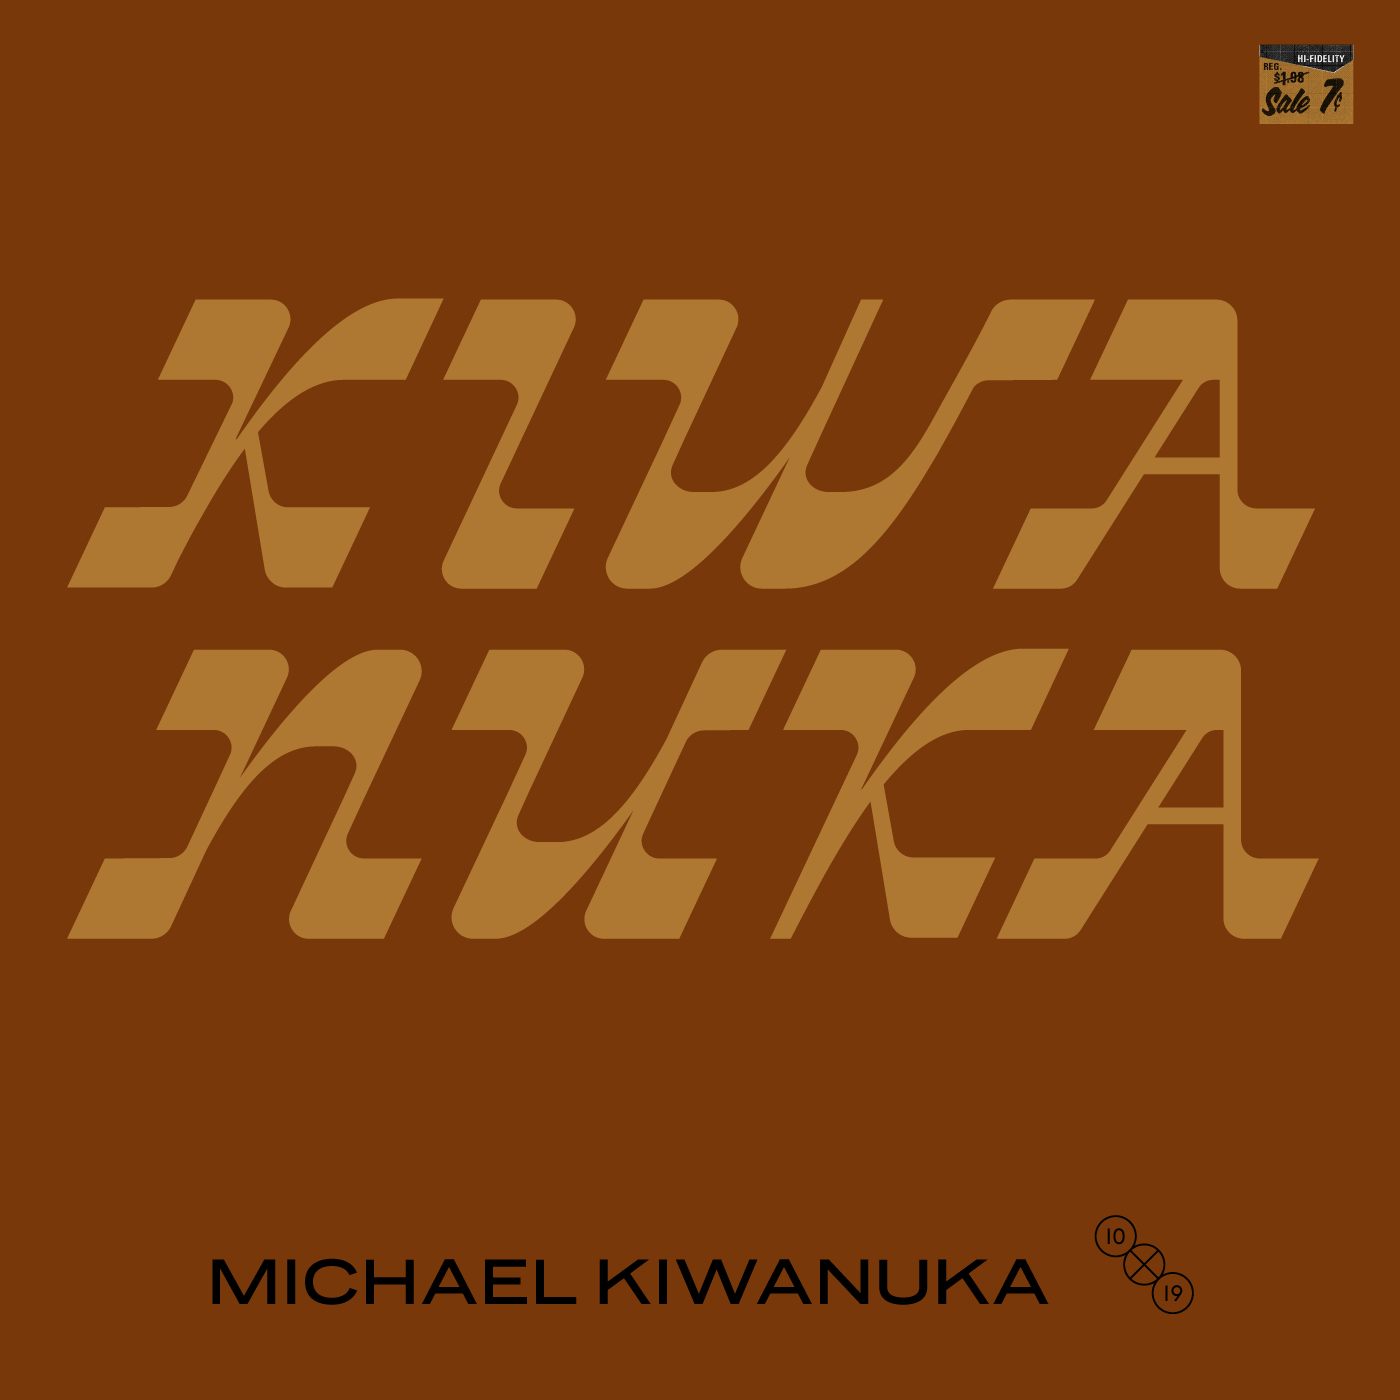 7. Michael Kiwanuka album cover by Amy Hood 10x19